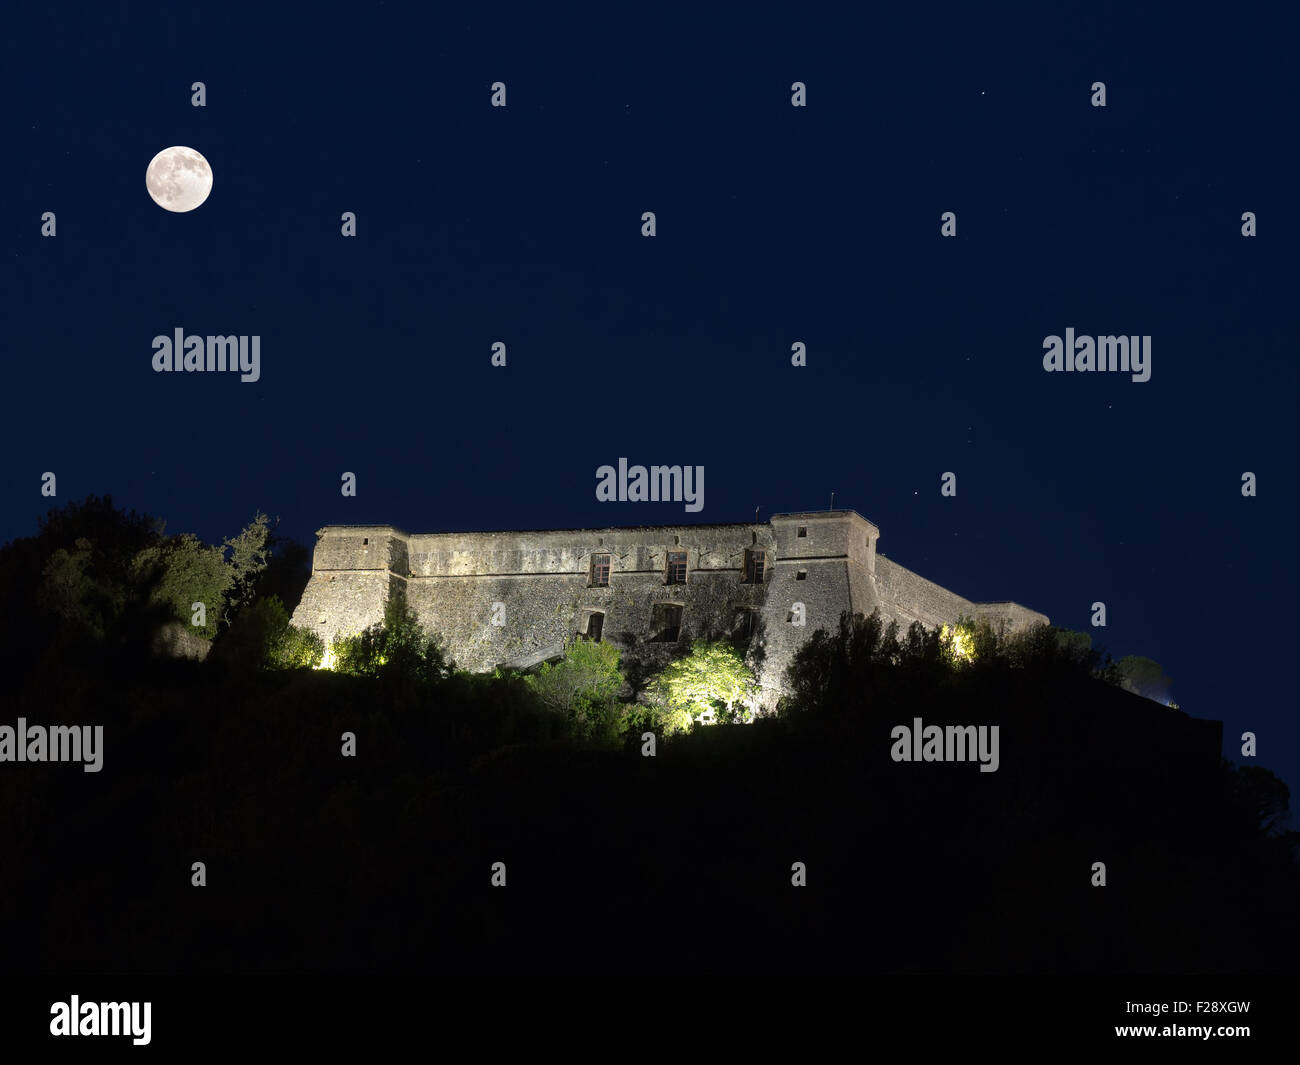 Landmark Brunella Fortress in Aulla, Massa Carrara. At night. Stock Photo